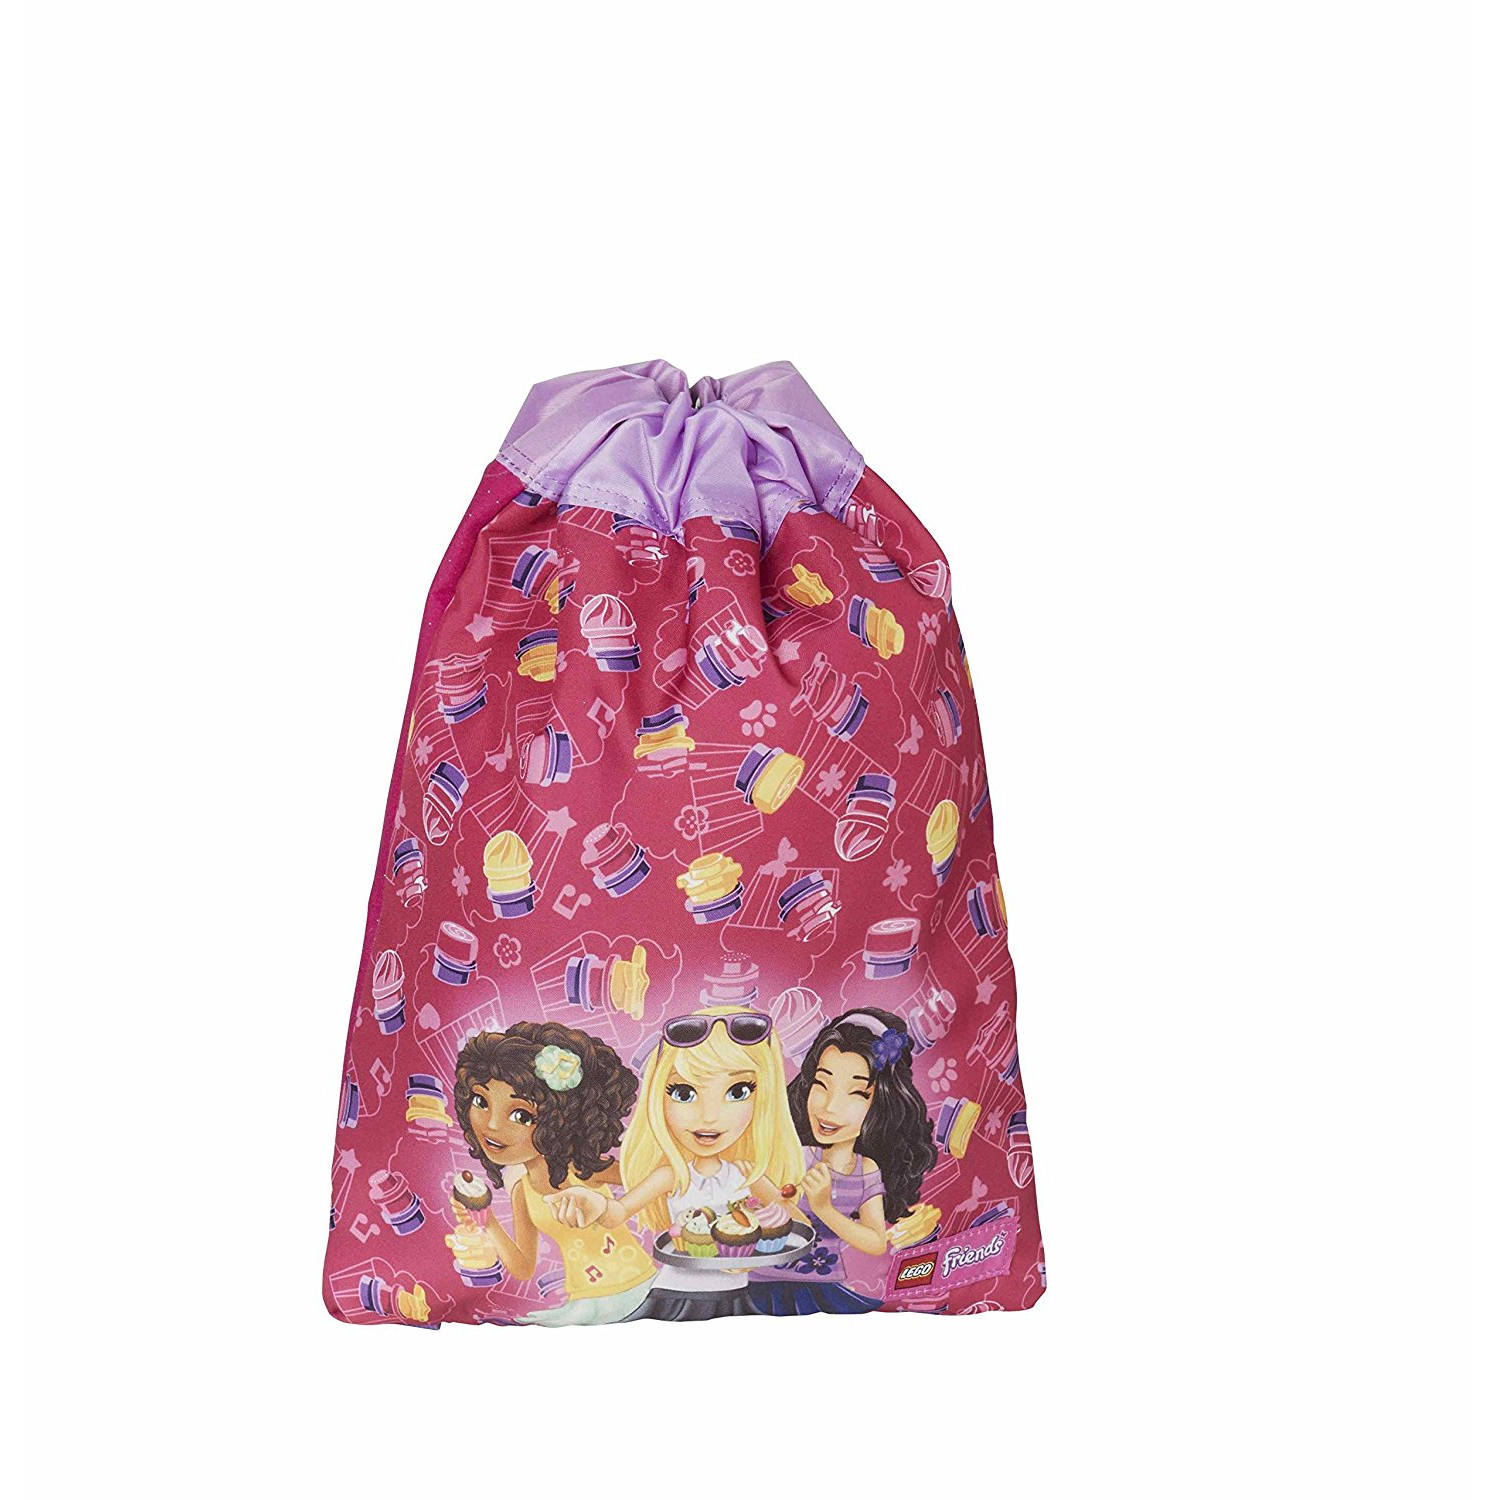 LEGO Friends Cupcake Drawstring Gym Bag (20010-1711)